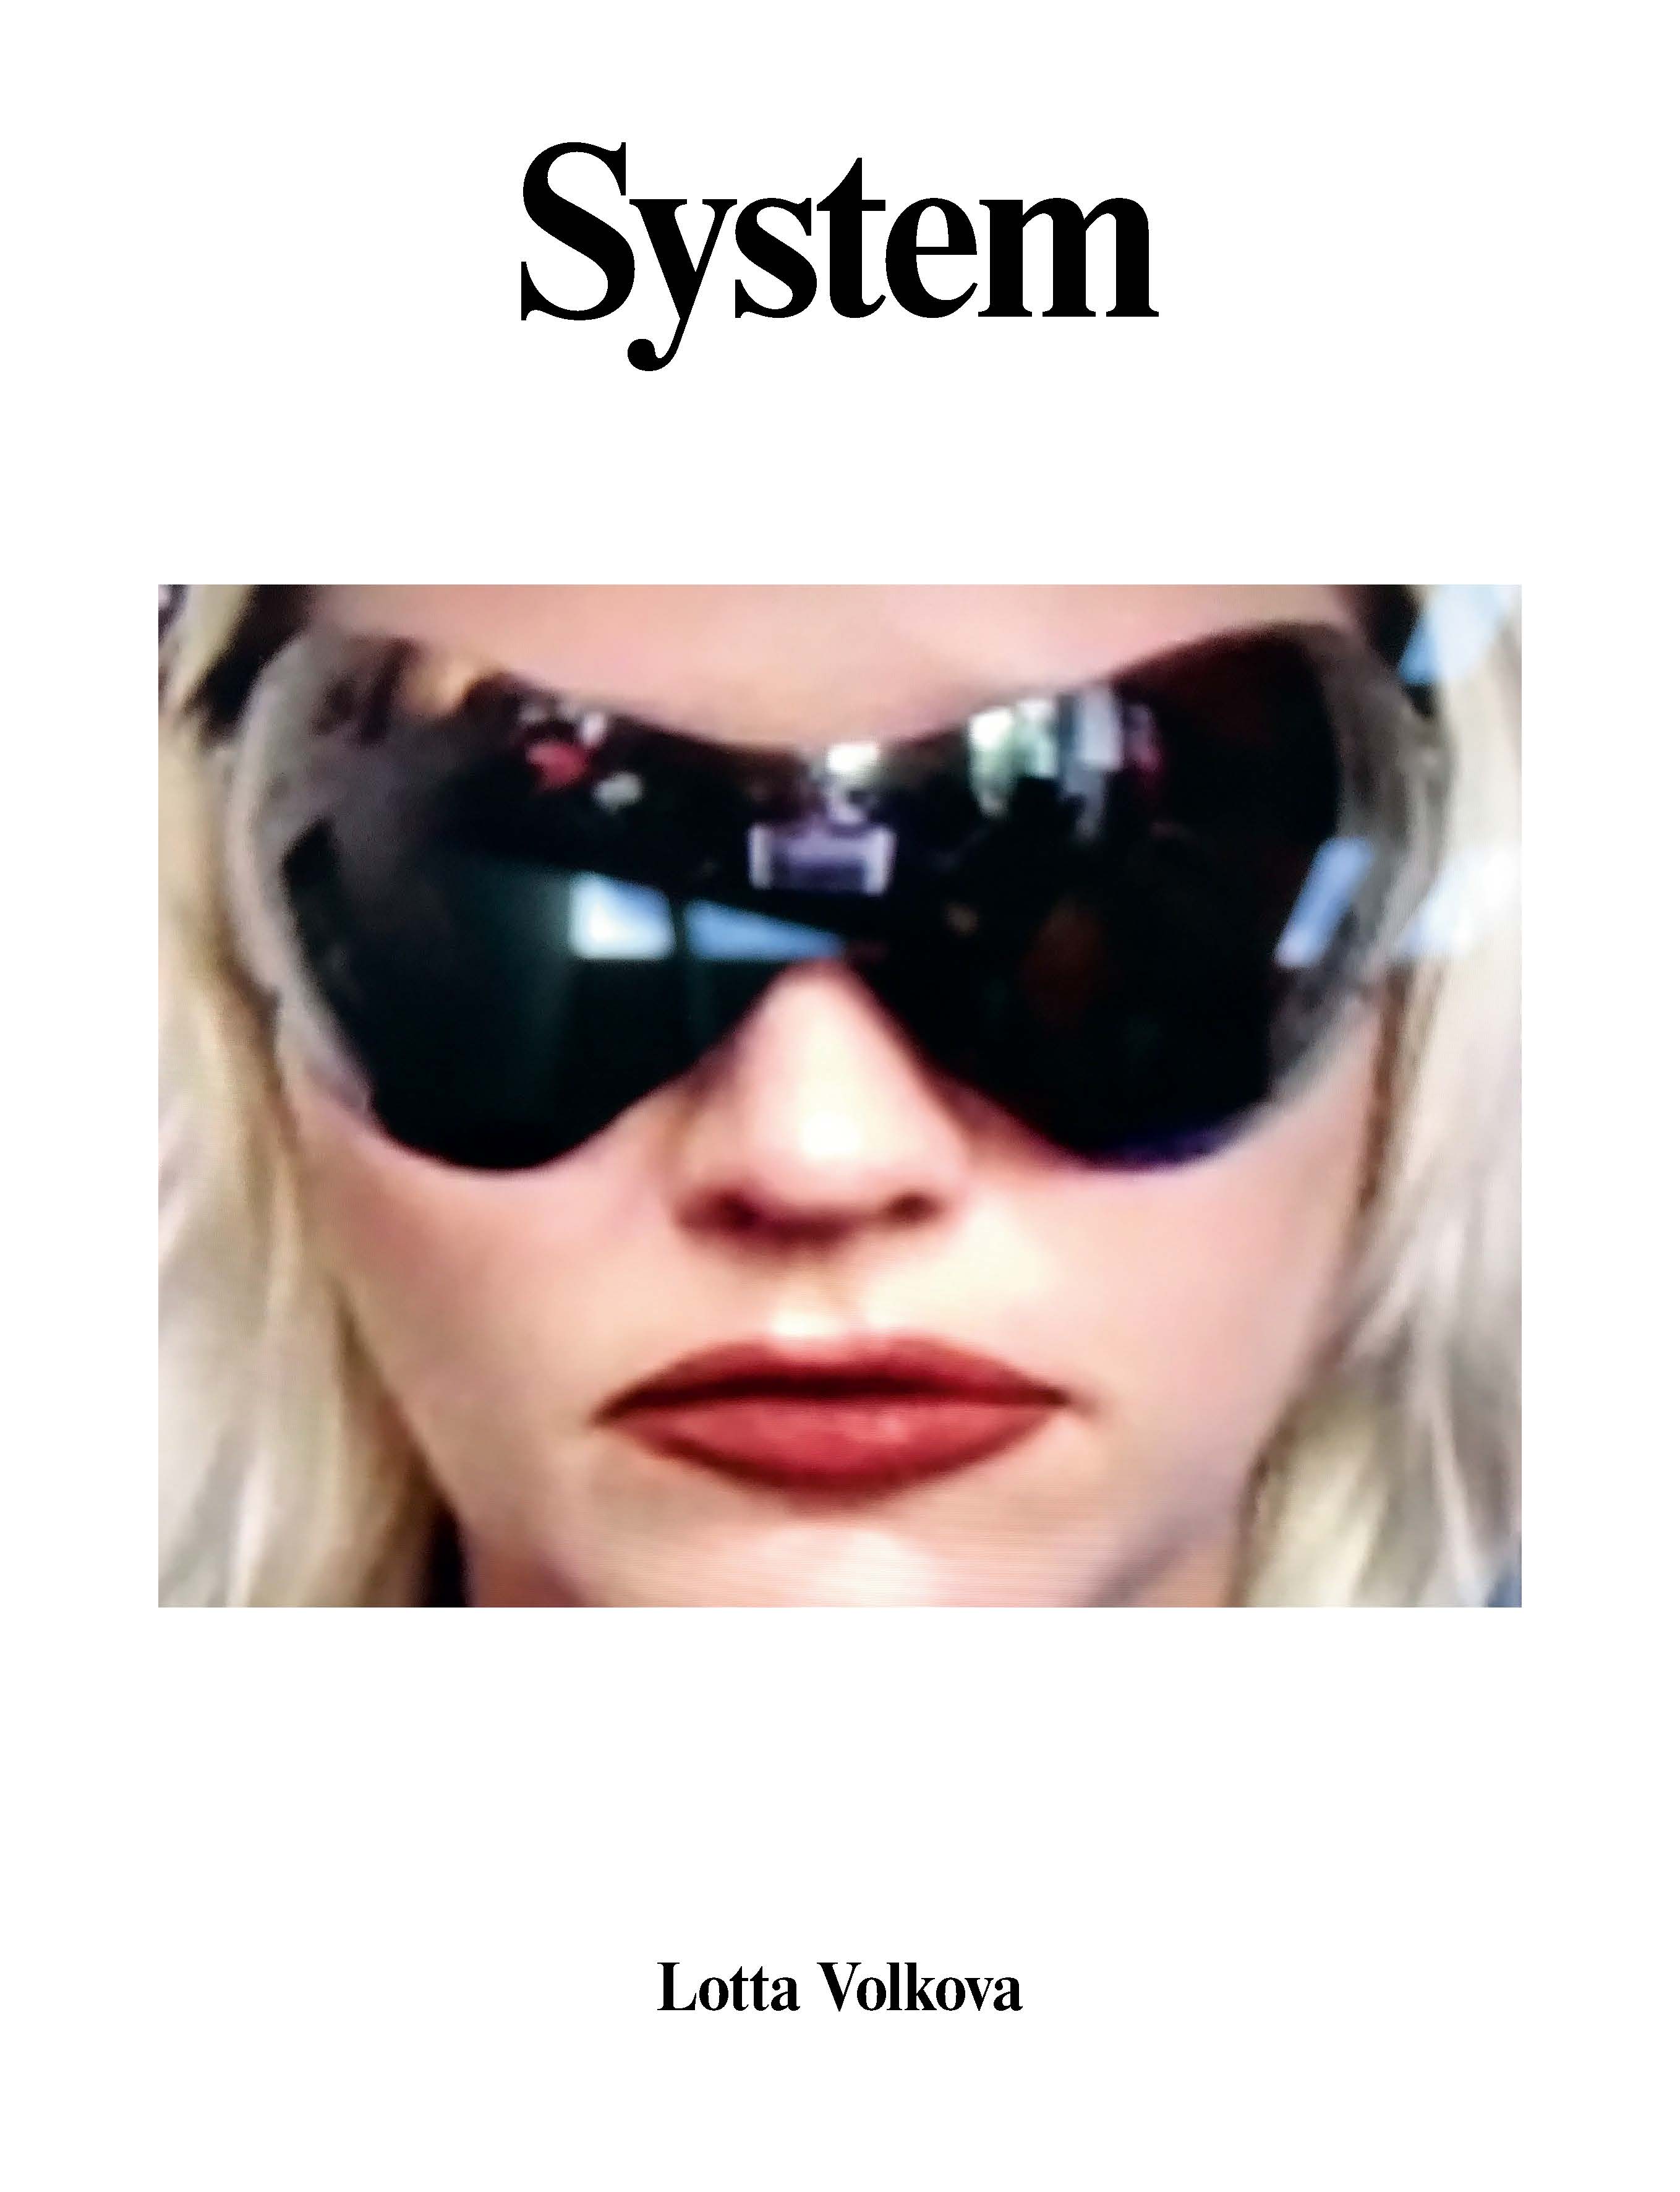 Issue 15 - © System Magazine